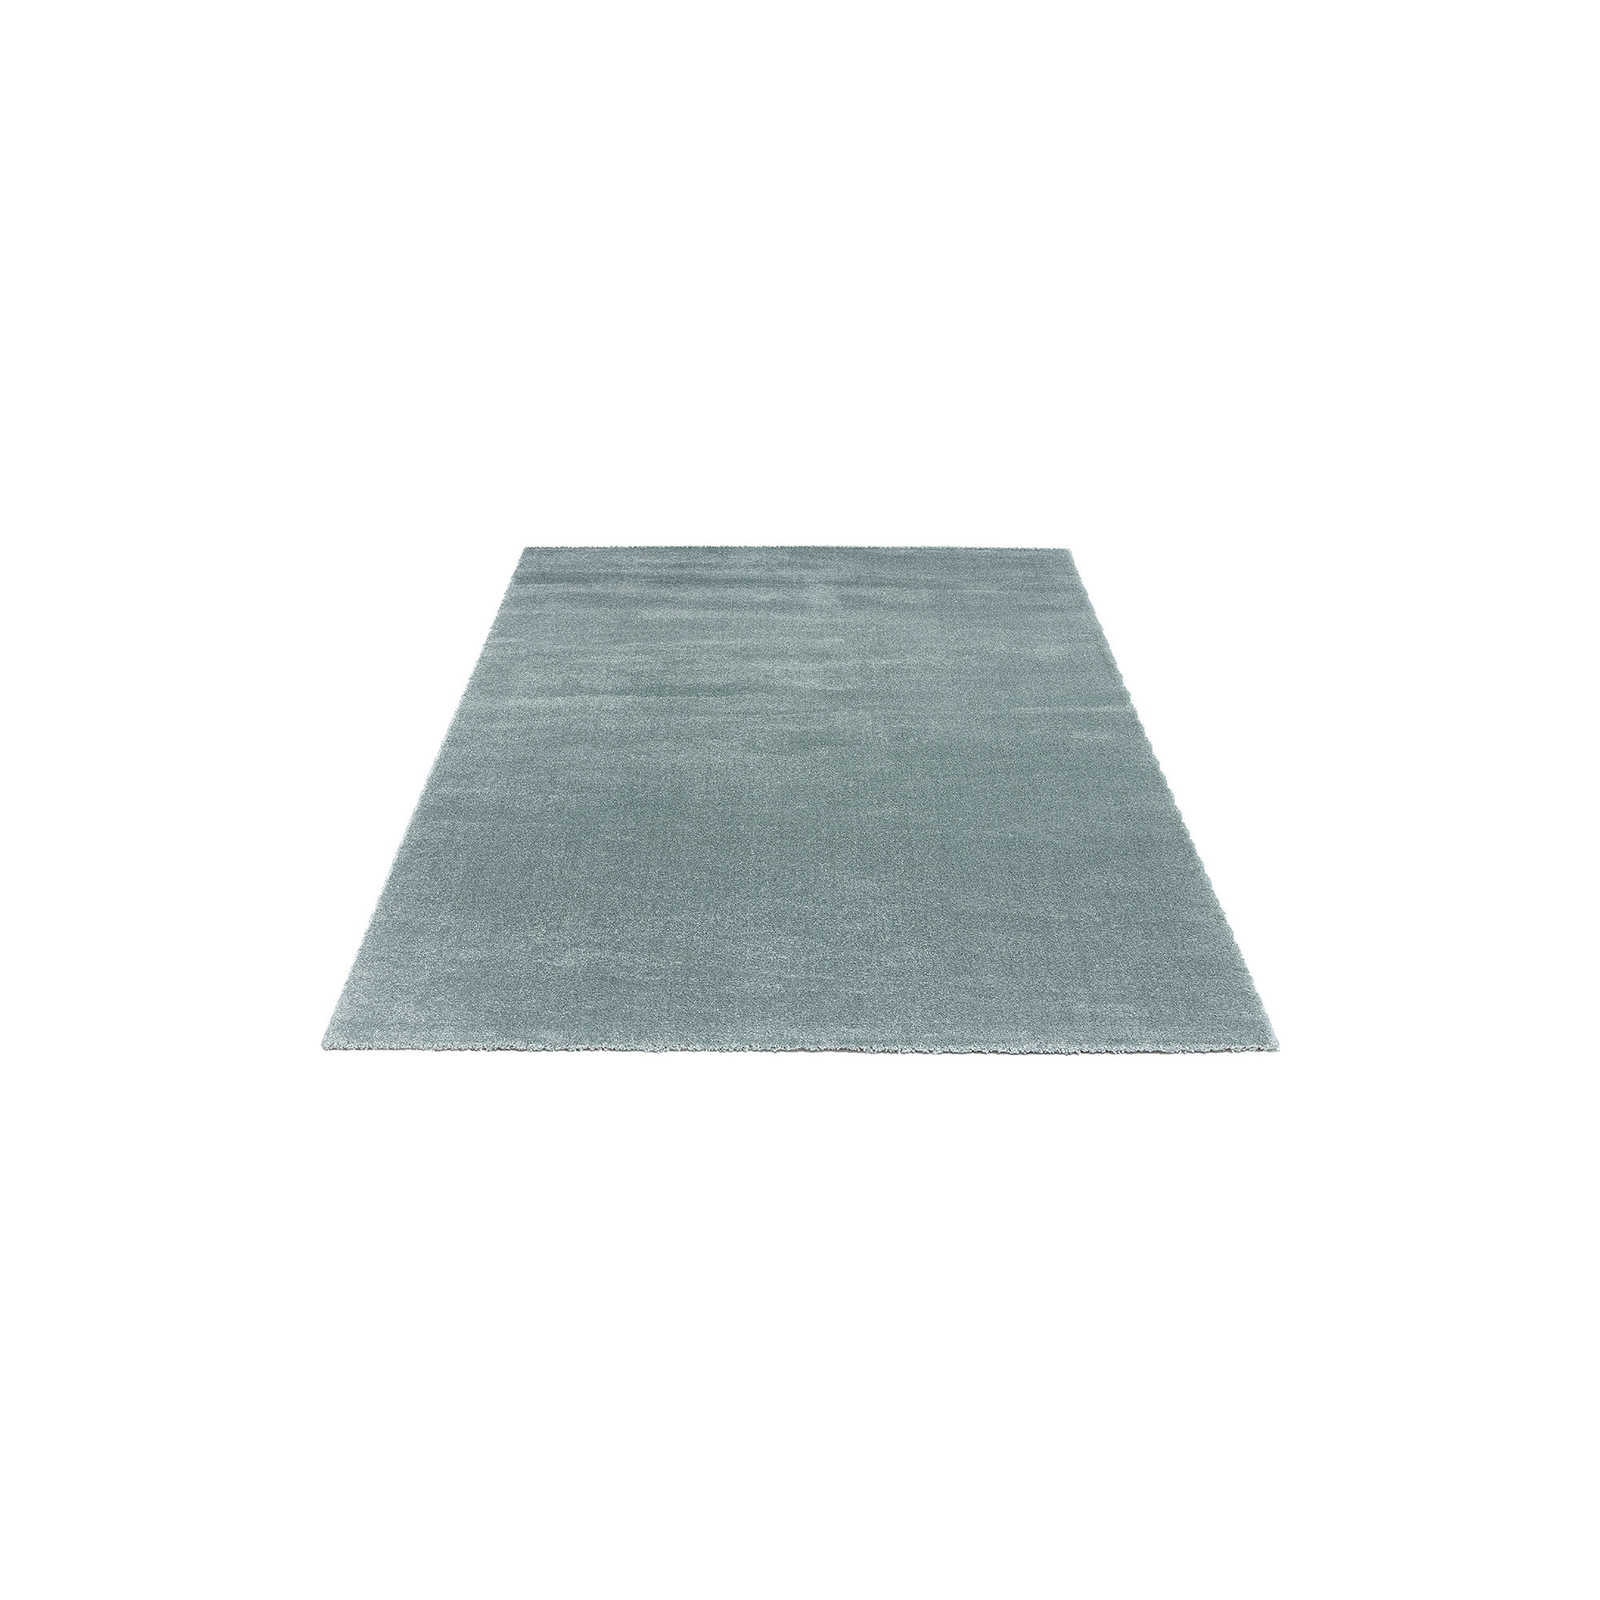 Simple short pile carpet in blue - 170 x 120 cm
